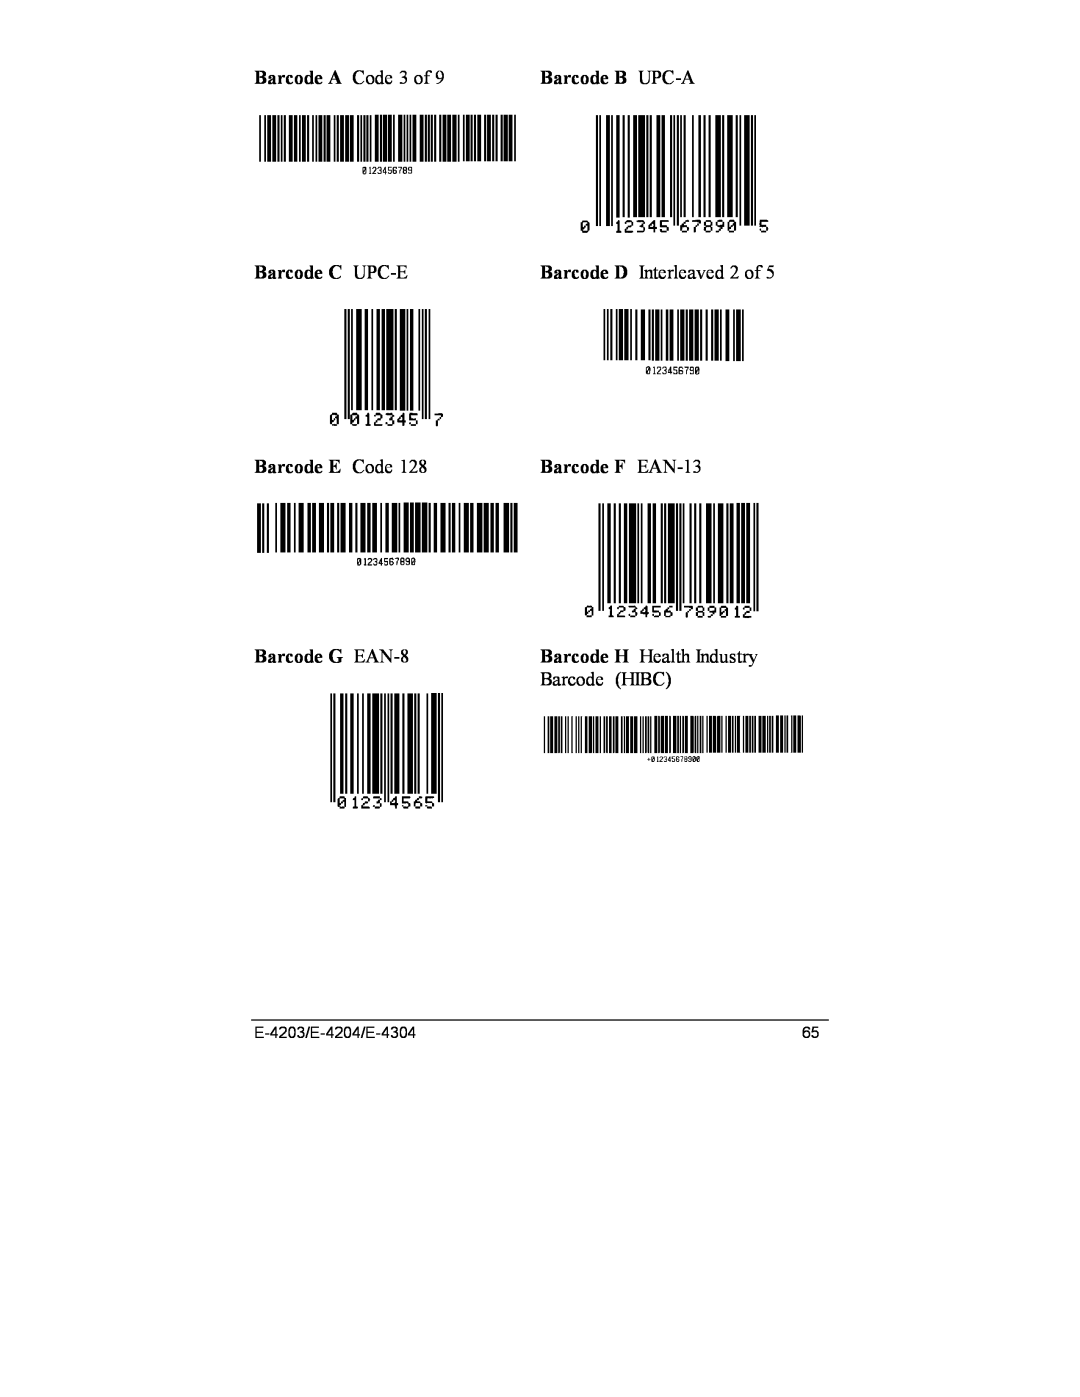 Datamax E-4203, E-4204 Barcode A Code 3 of, Barcode C UPC-E, Barcode D Interleaved 2 of, Barcode E Code, Barcode F EAN-13 